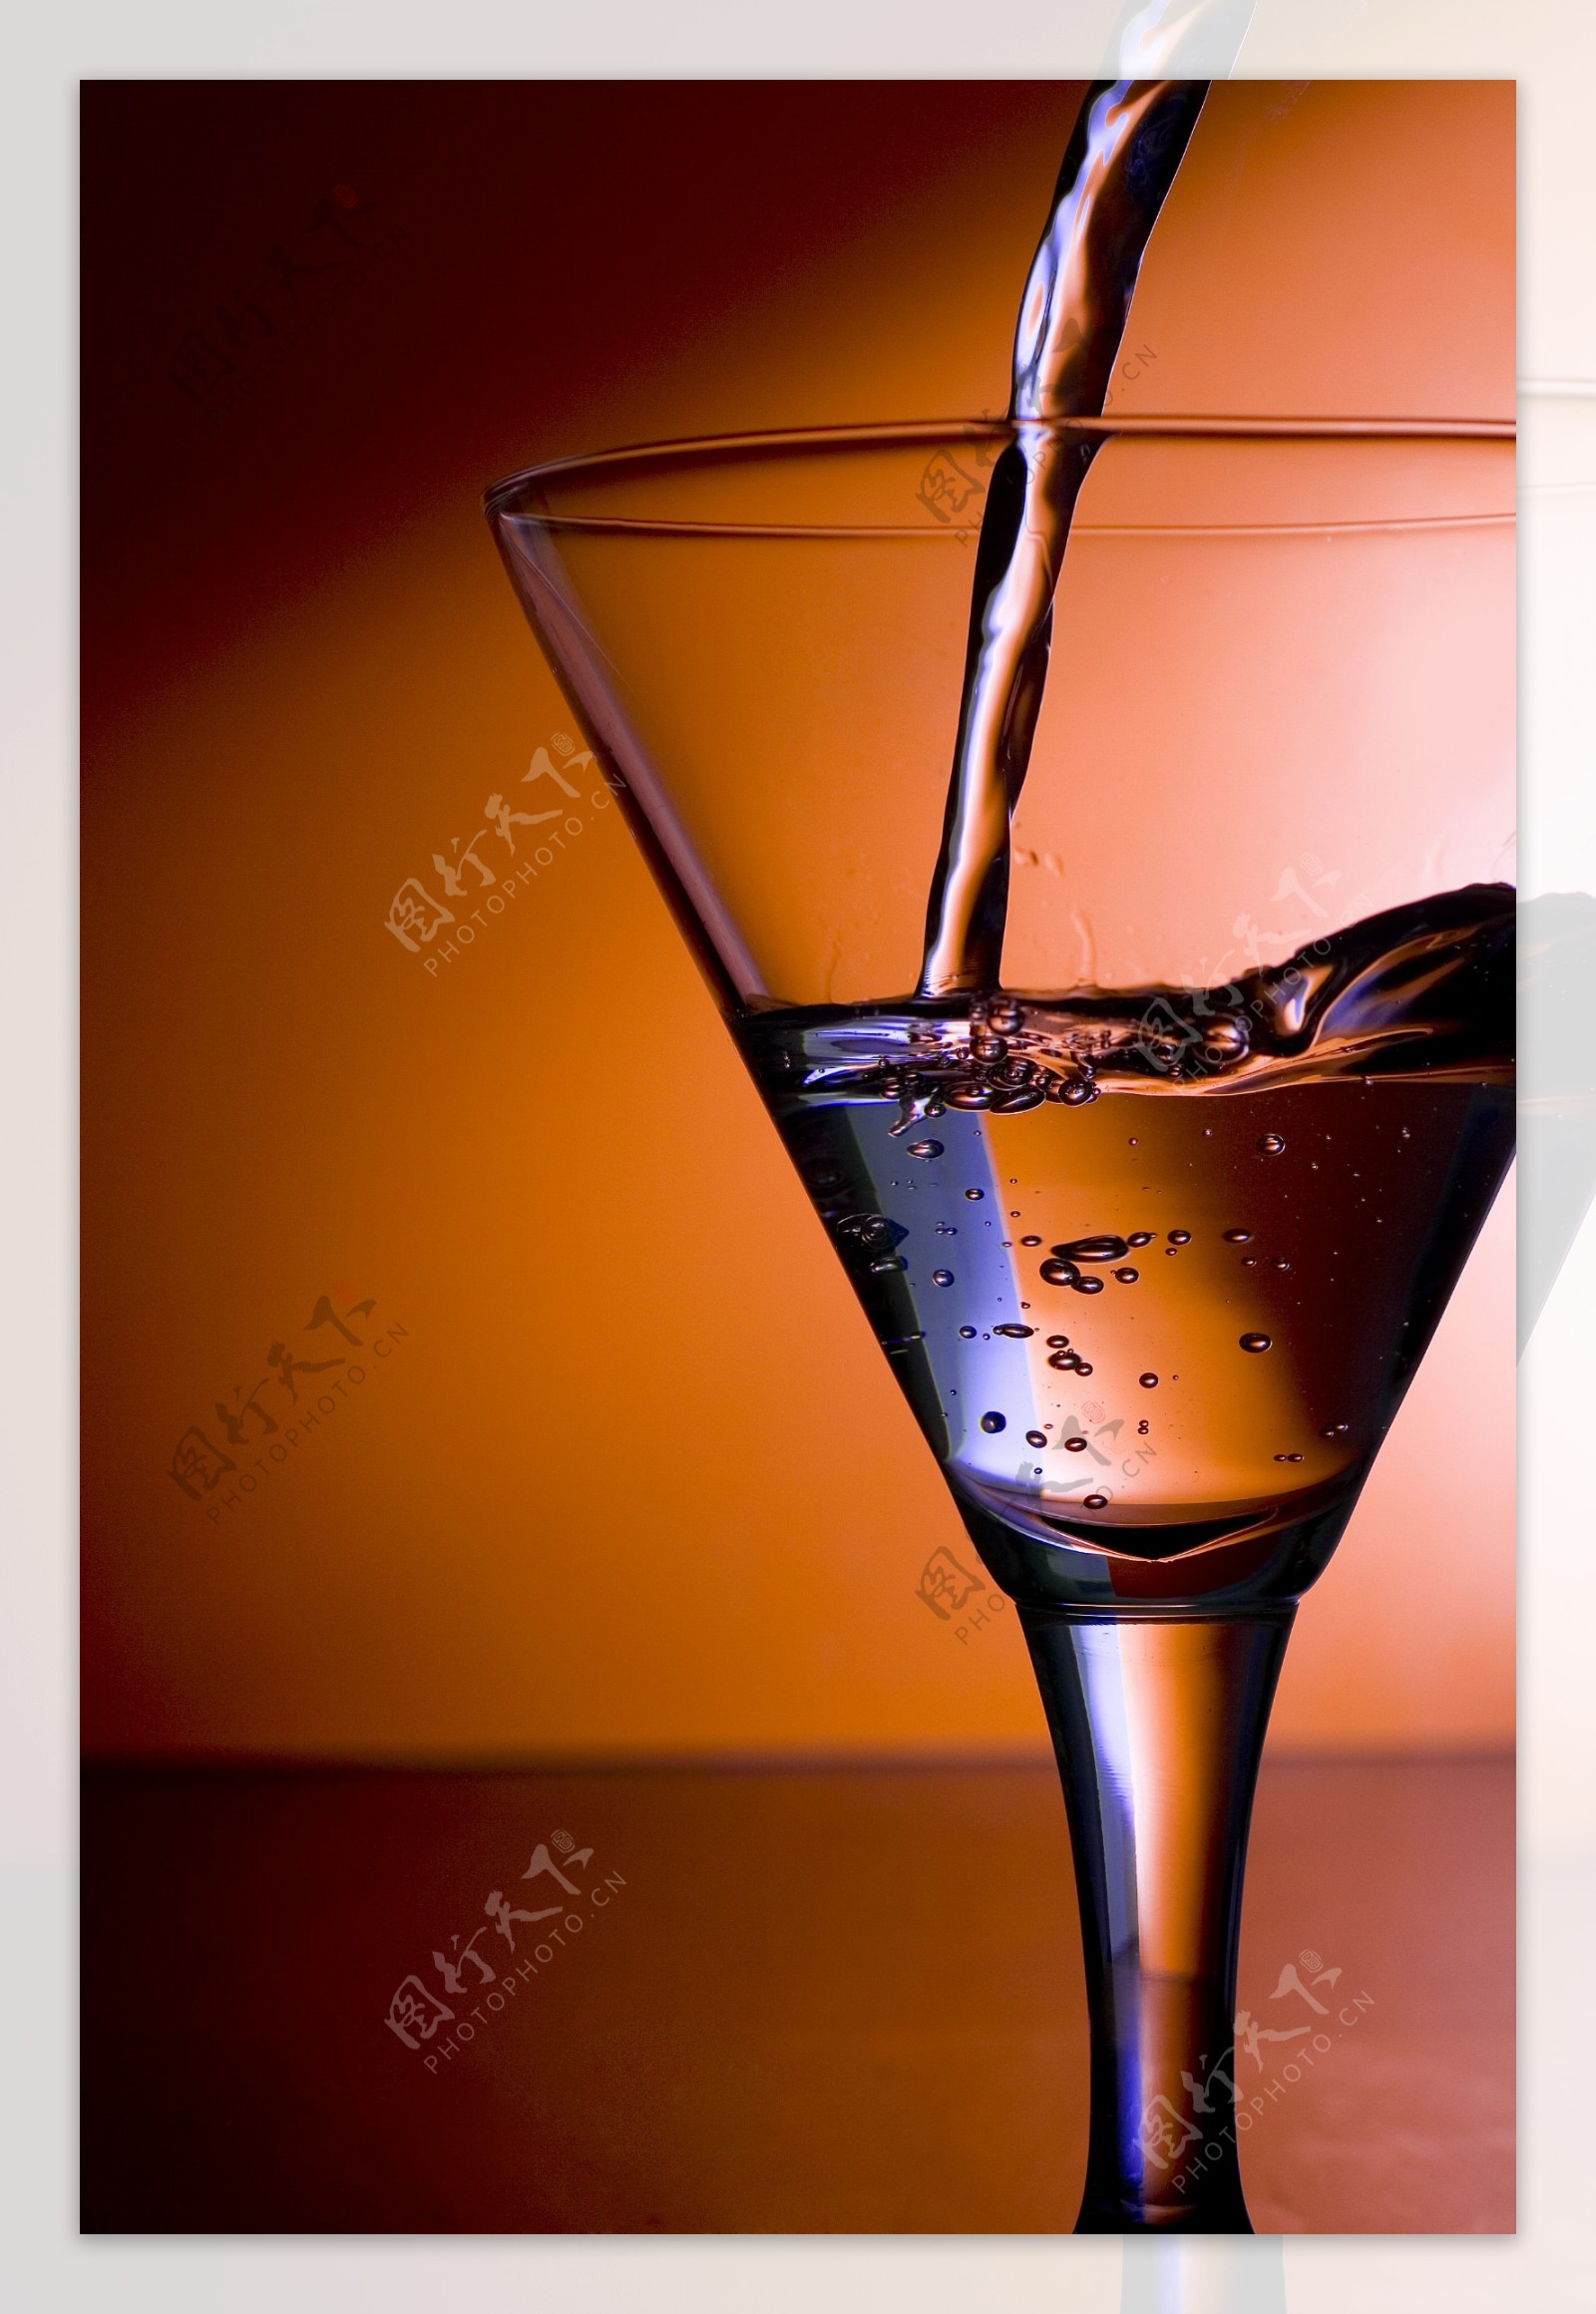 杯子的图片 – 免費圖庫pixabay – Ourfitne